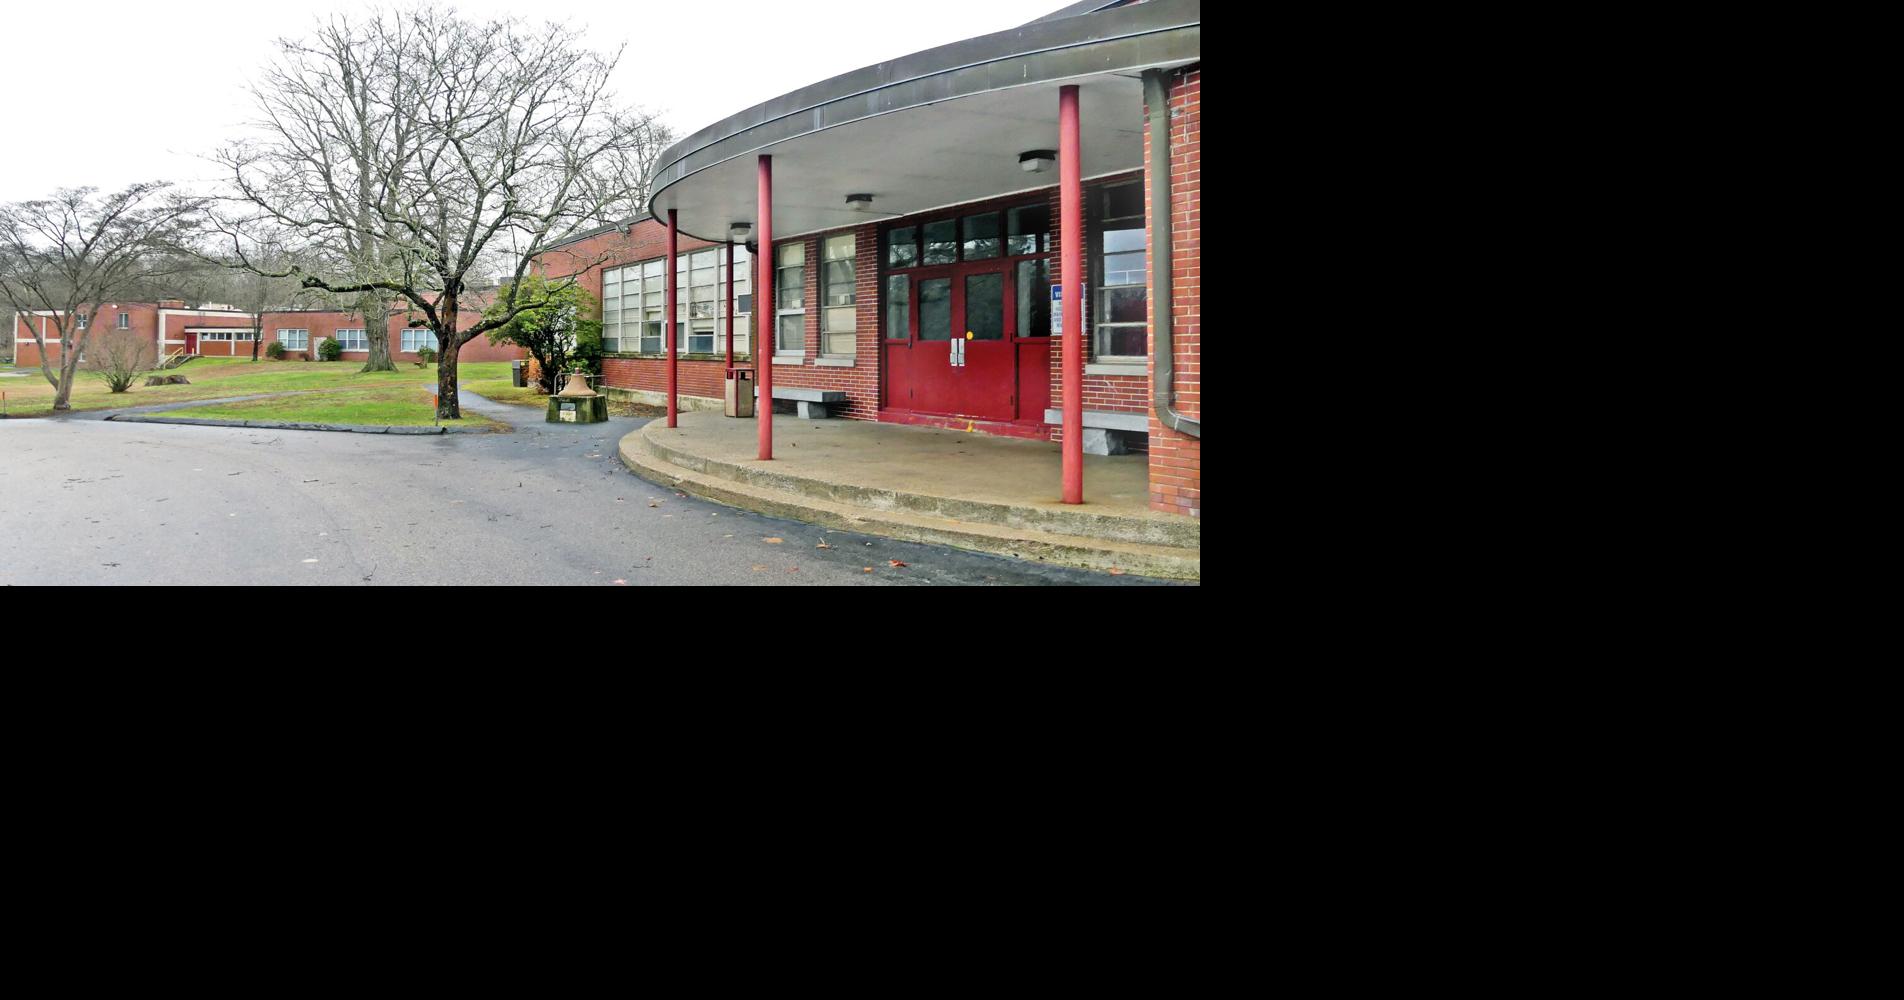 Finance board designates ARPA funds to North Stonington Education Center demolition | North Stonington